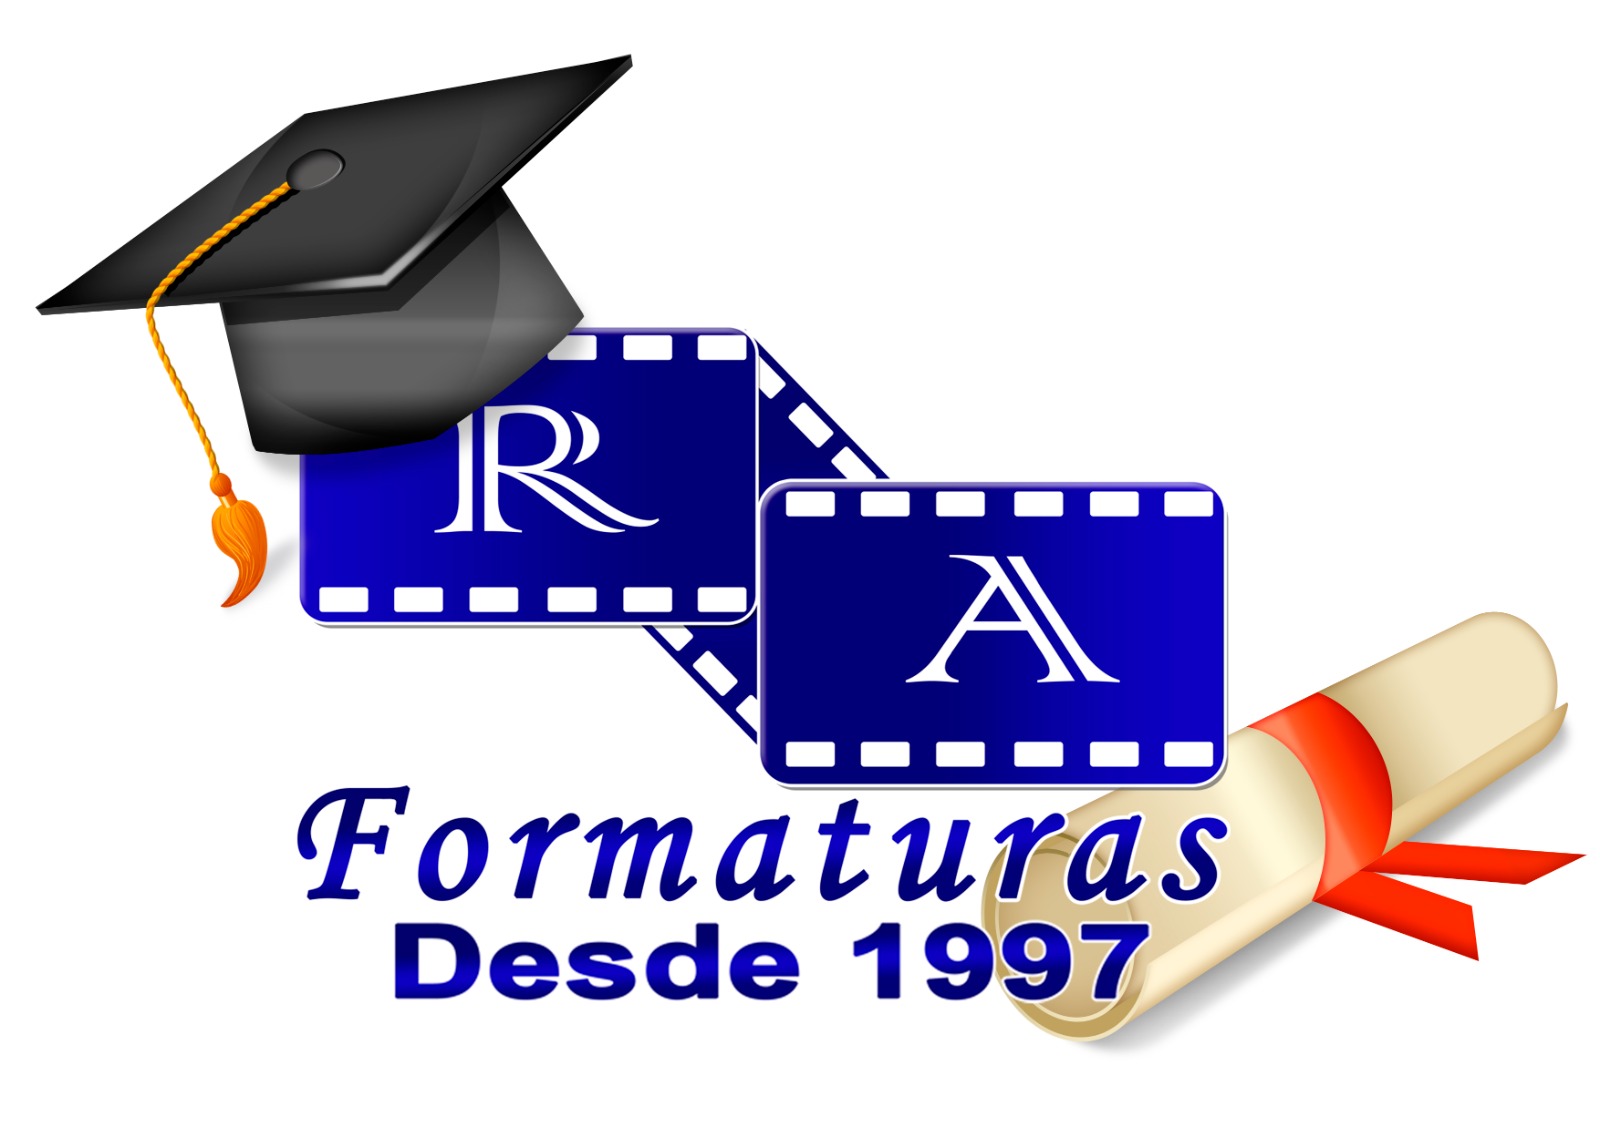 R. A. FORMATURAS